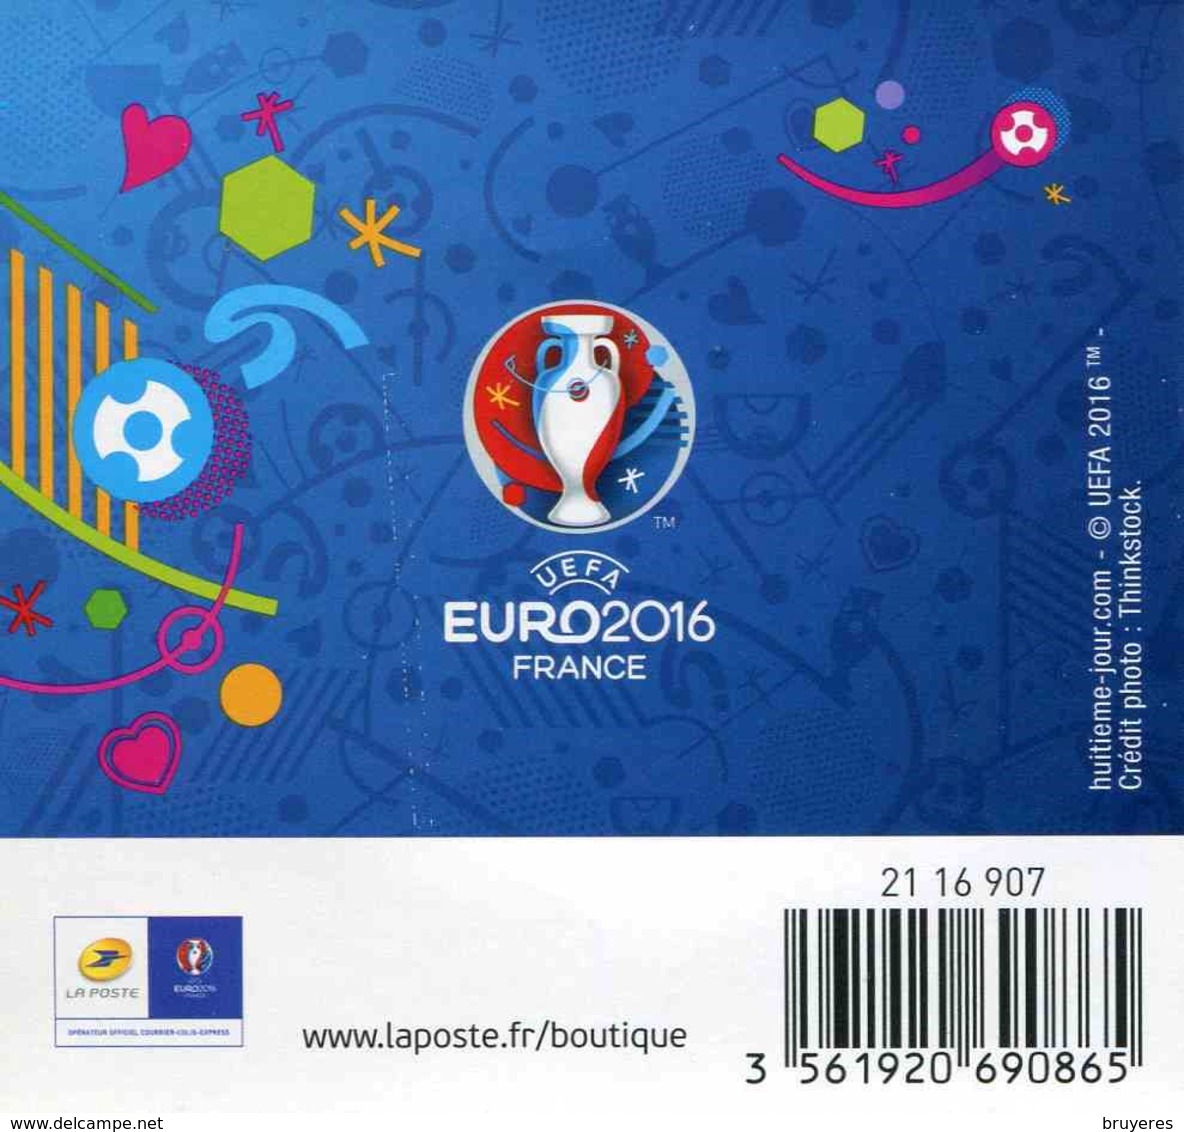 Mini Collector De 2016 Avec Timbre Adhésif "NICE - UEFA EURO 2016 - Europe Phil@poste" - Collectors